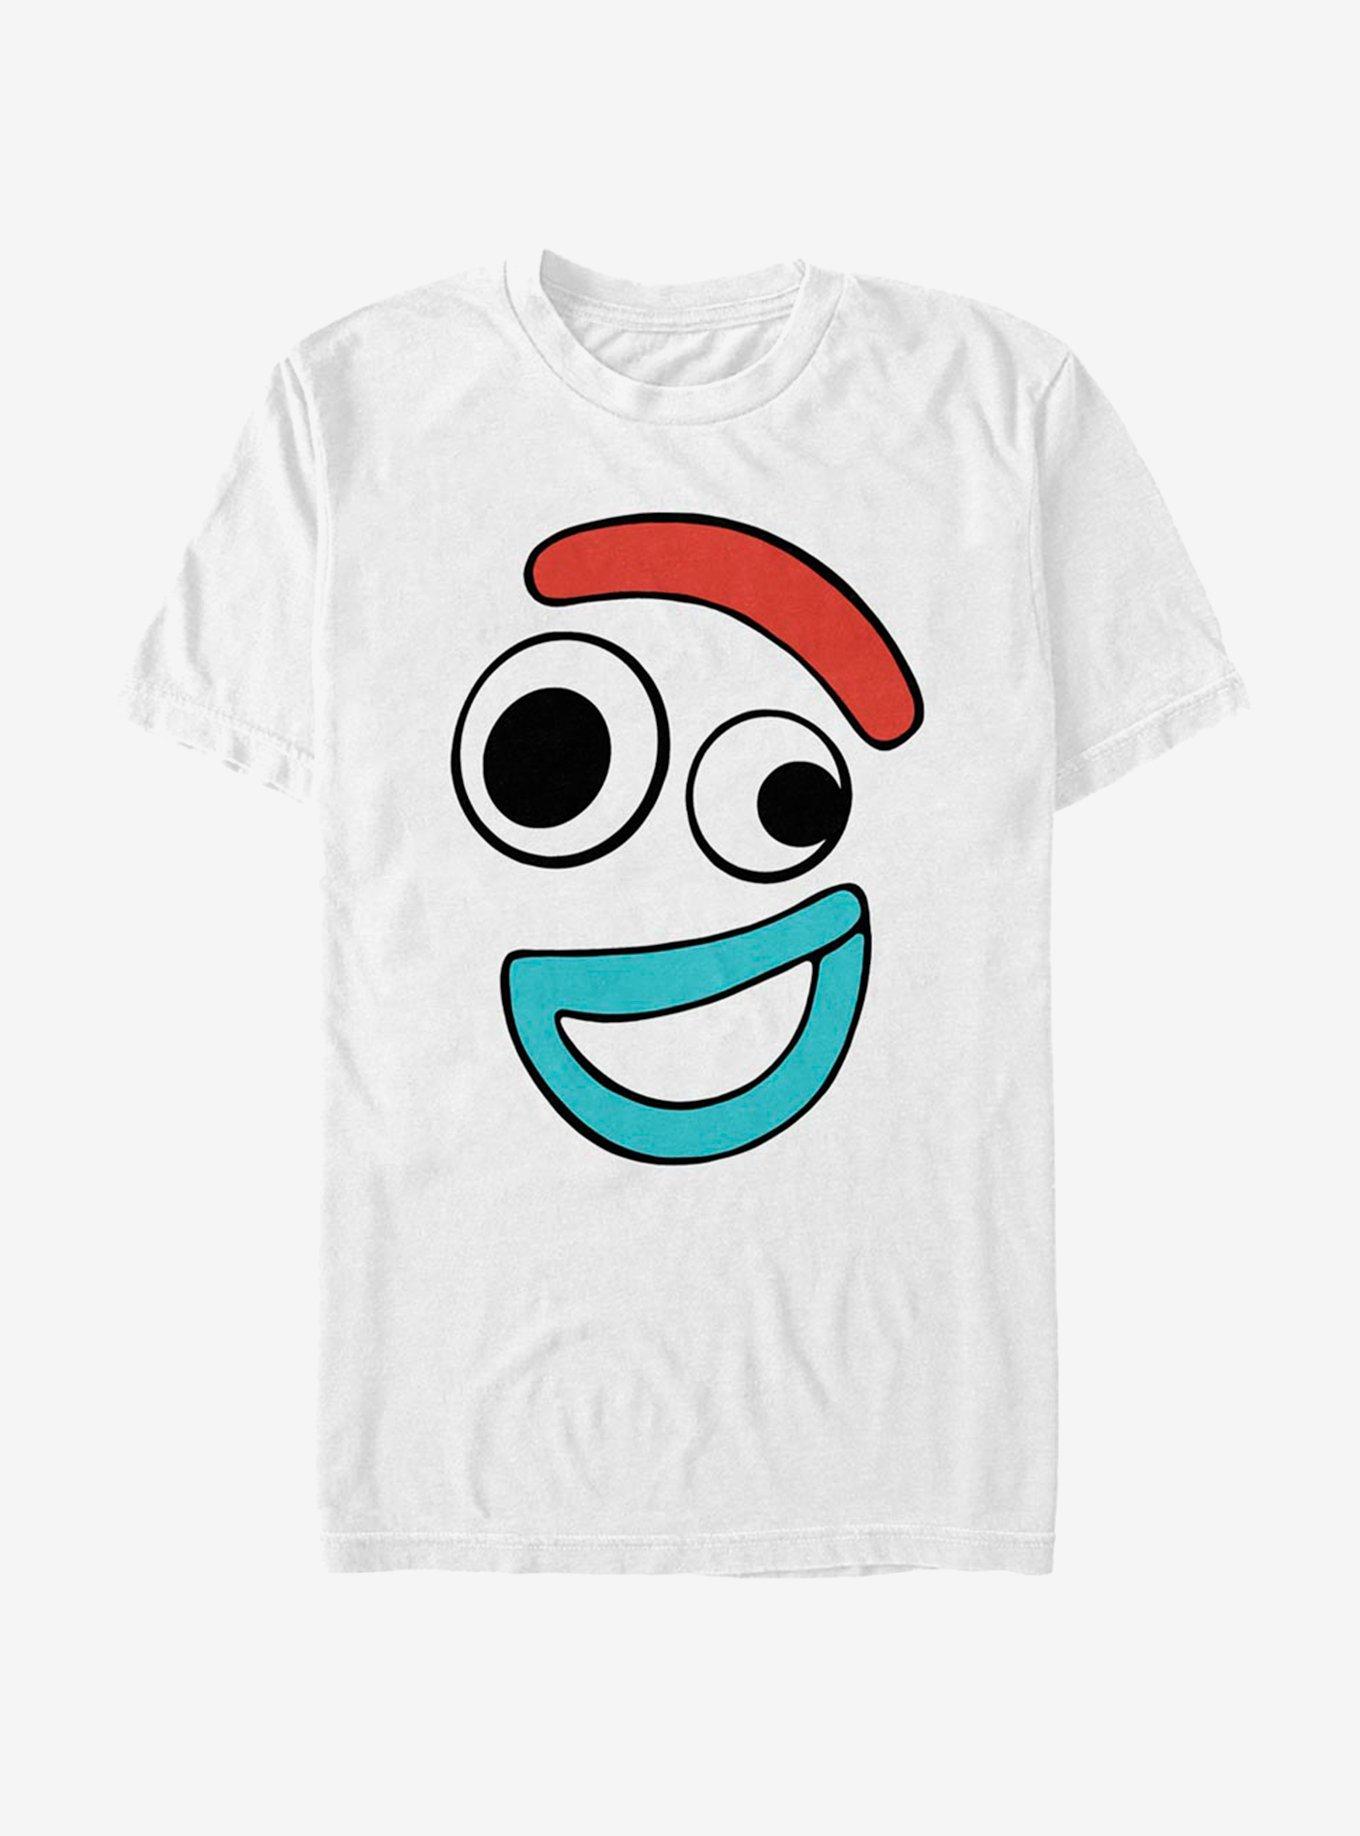 Disney Pixar Toy Story 4 Big Face Smiling Forky T-Shirt, WHITE, hi-res